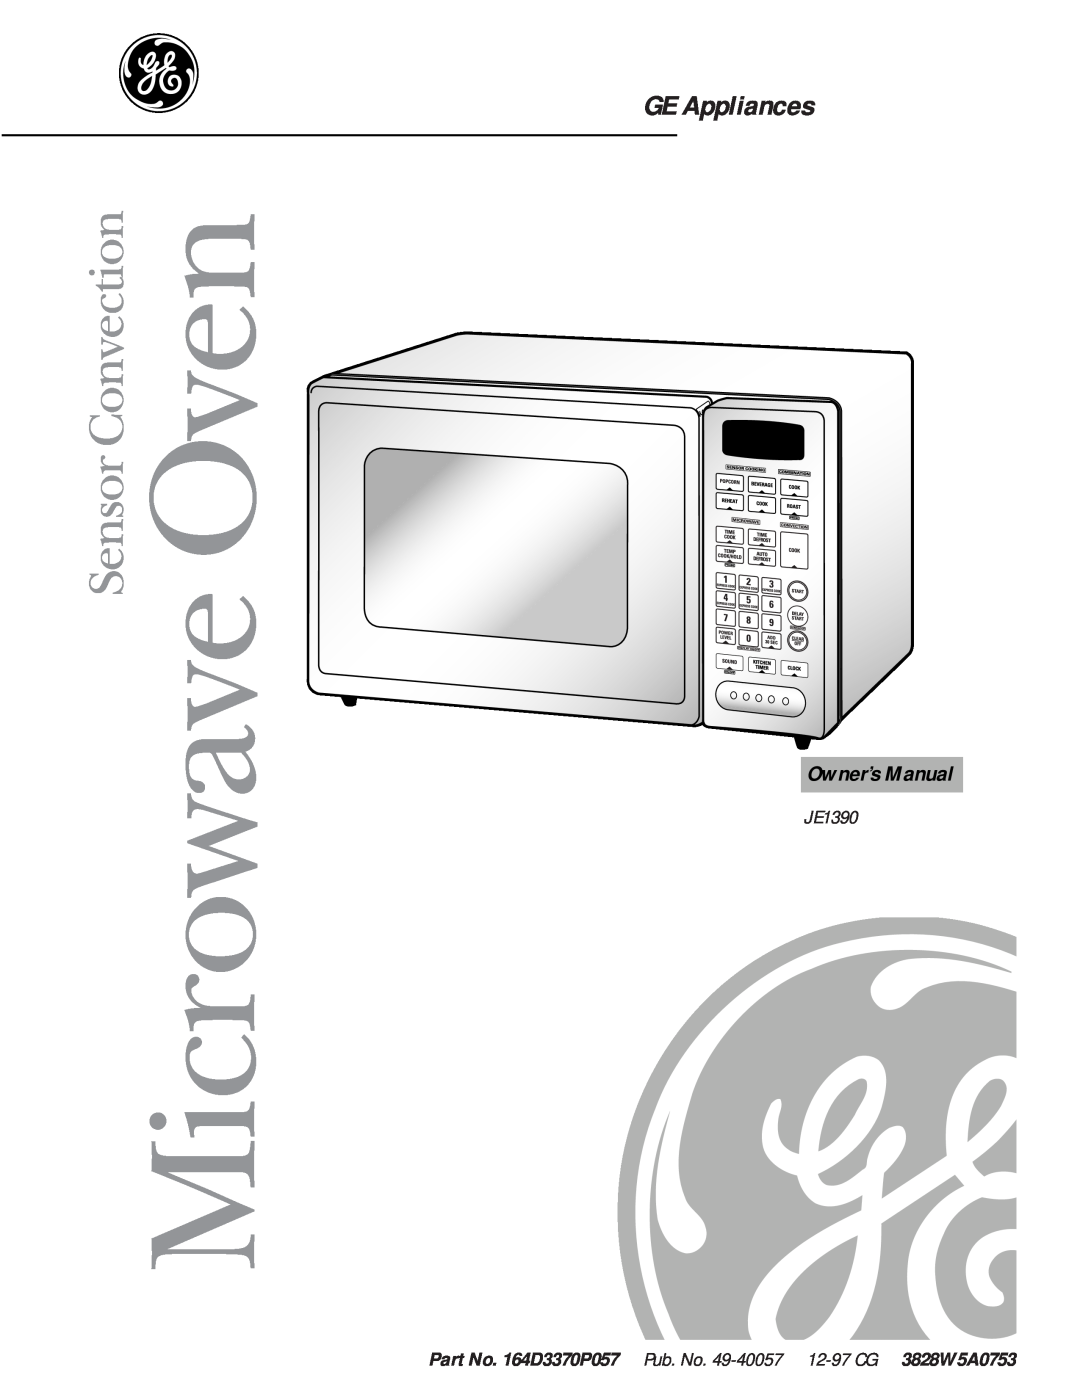 GE JE1390 owner manual GE Appliances, Microwave Oven, Sensor Convection 